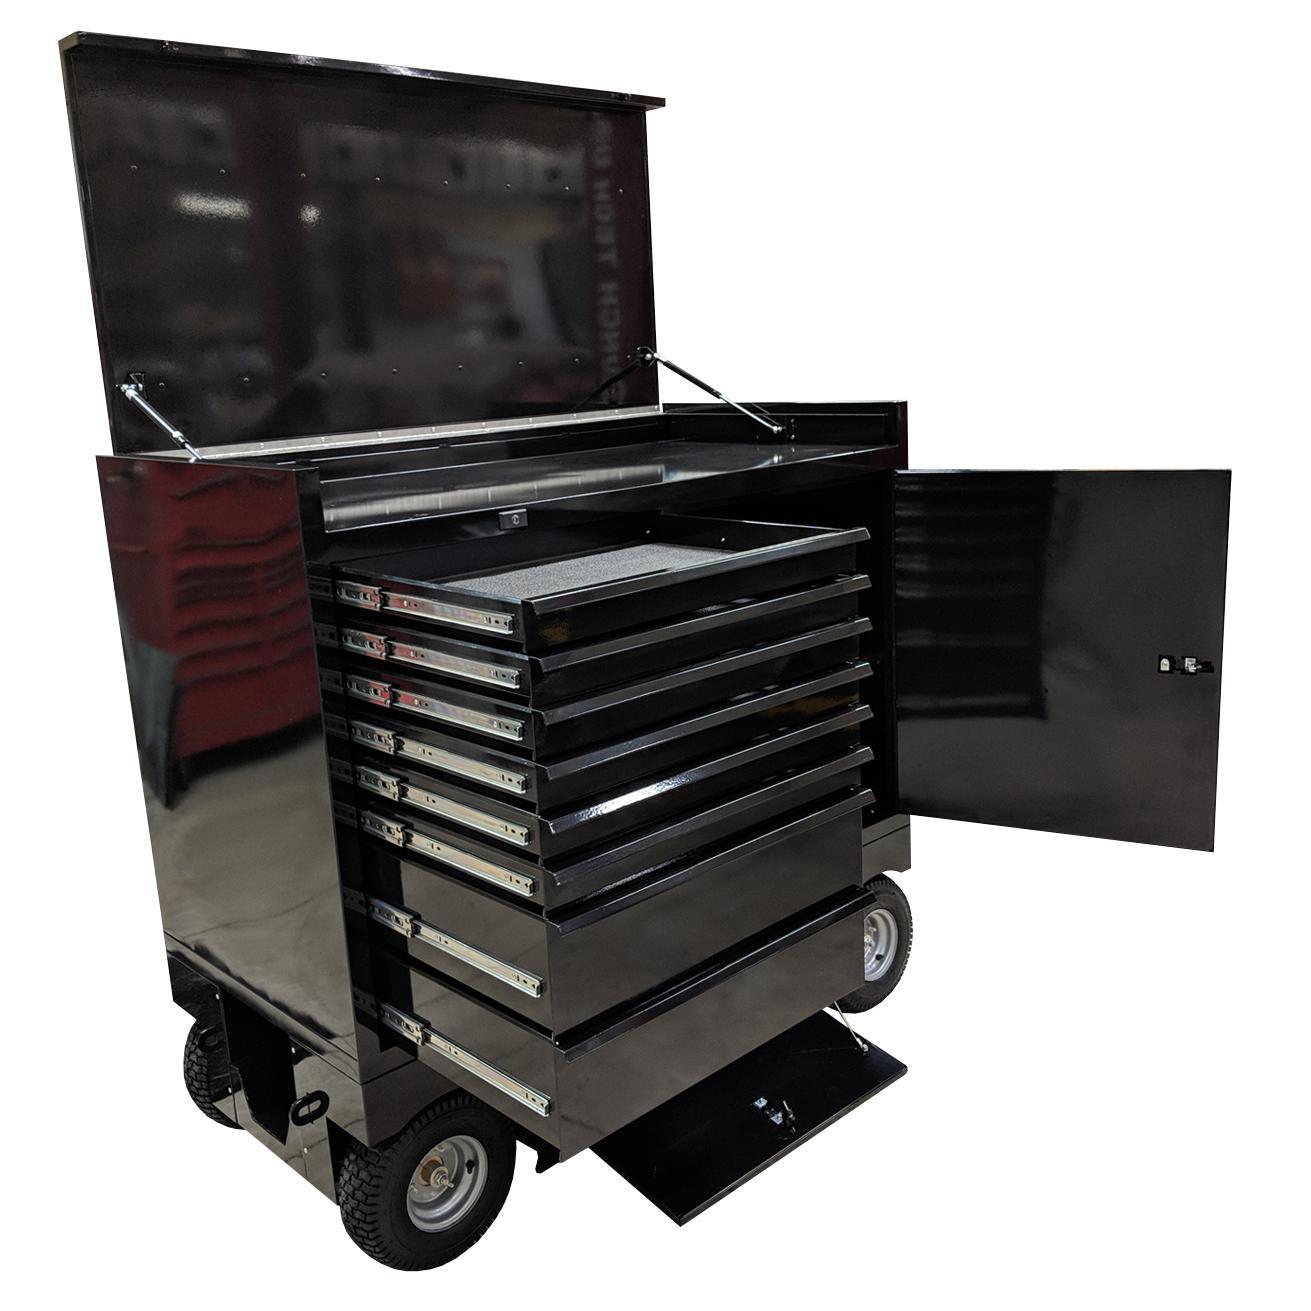 Commercial Heavy-Duty Utility Service Cart | 3 Shelf | | 450 Lbs Max  Capacity | Rolling Utility Cart W 33 x H 37 x D 16 Black